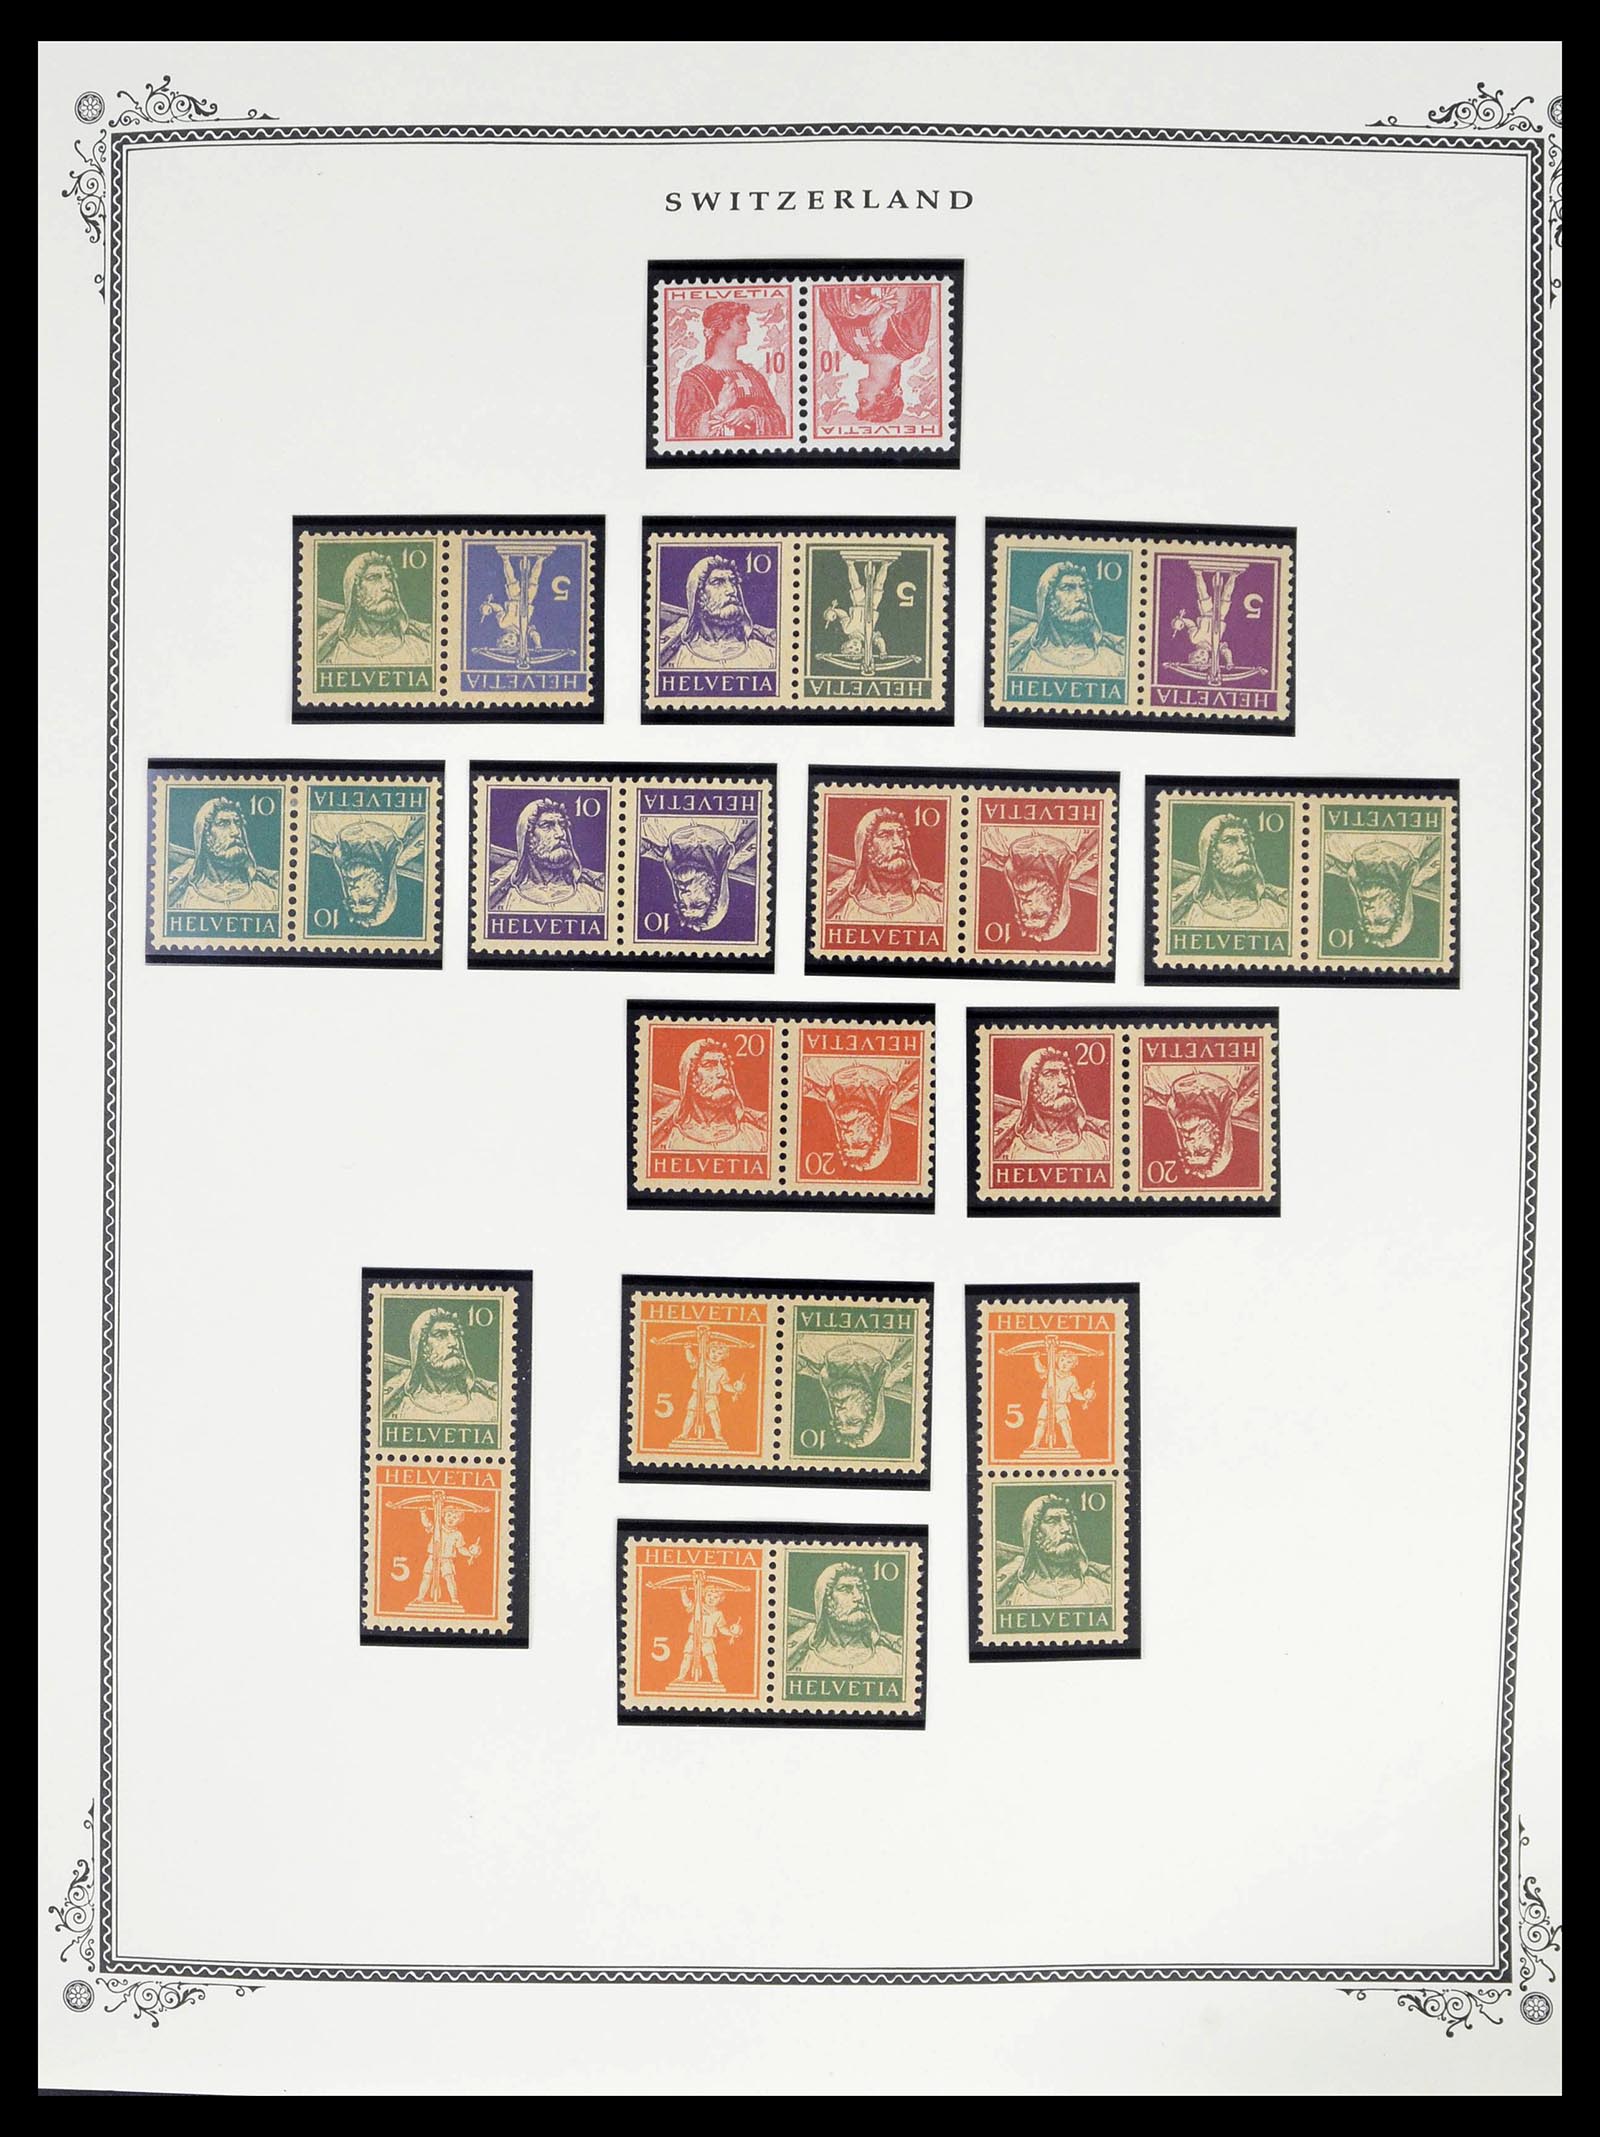 39178 0016 - Stamp collection 39178 Switzerland 1850-1989.